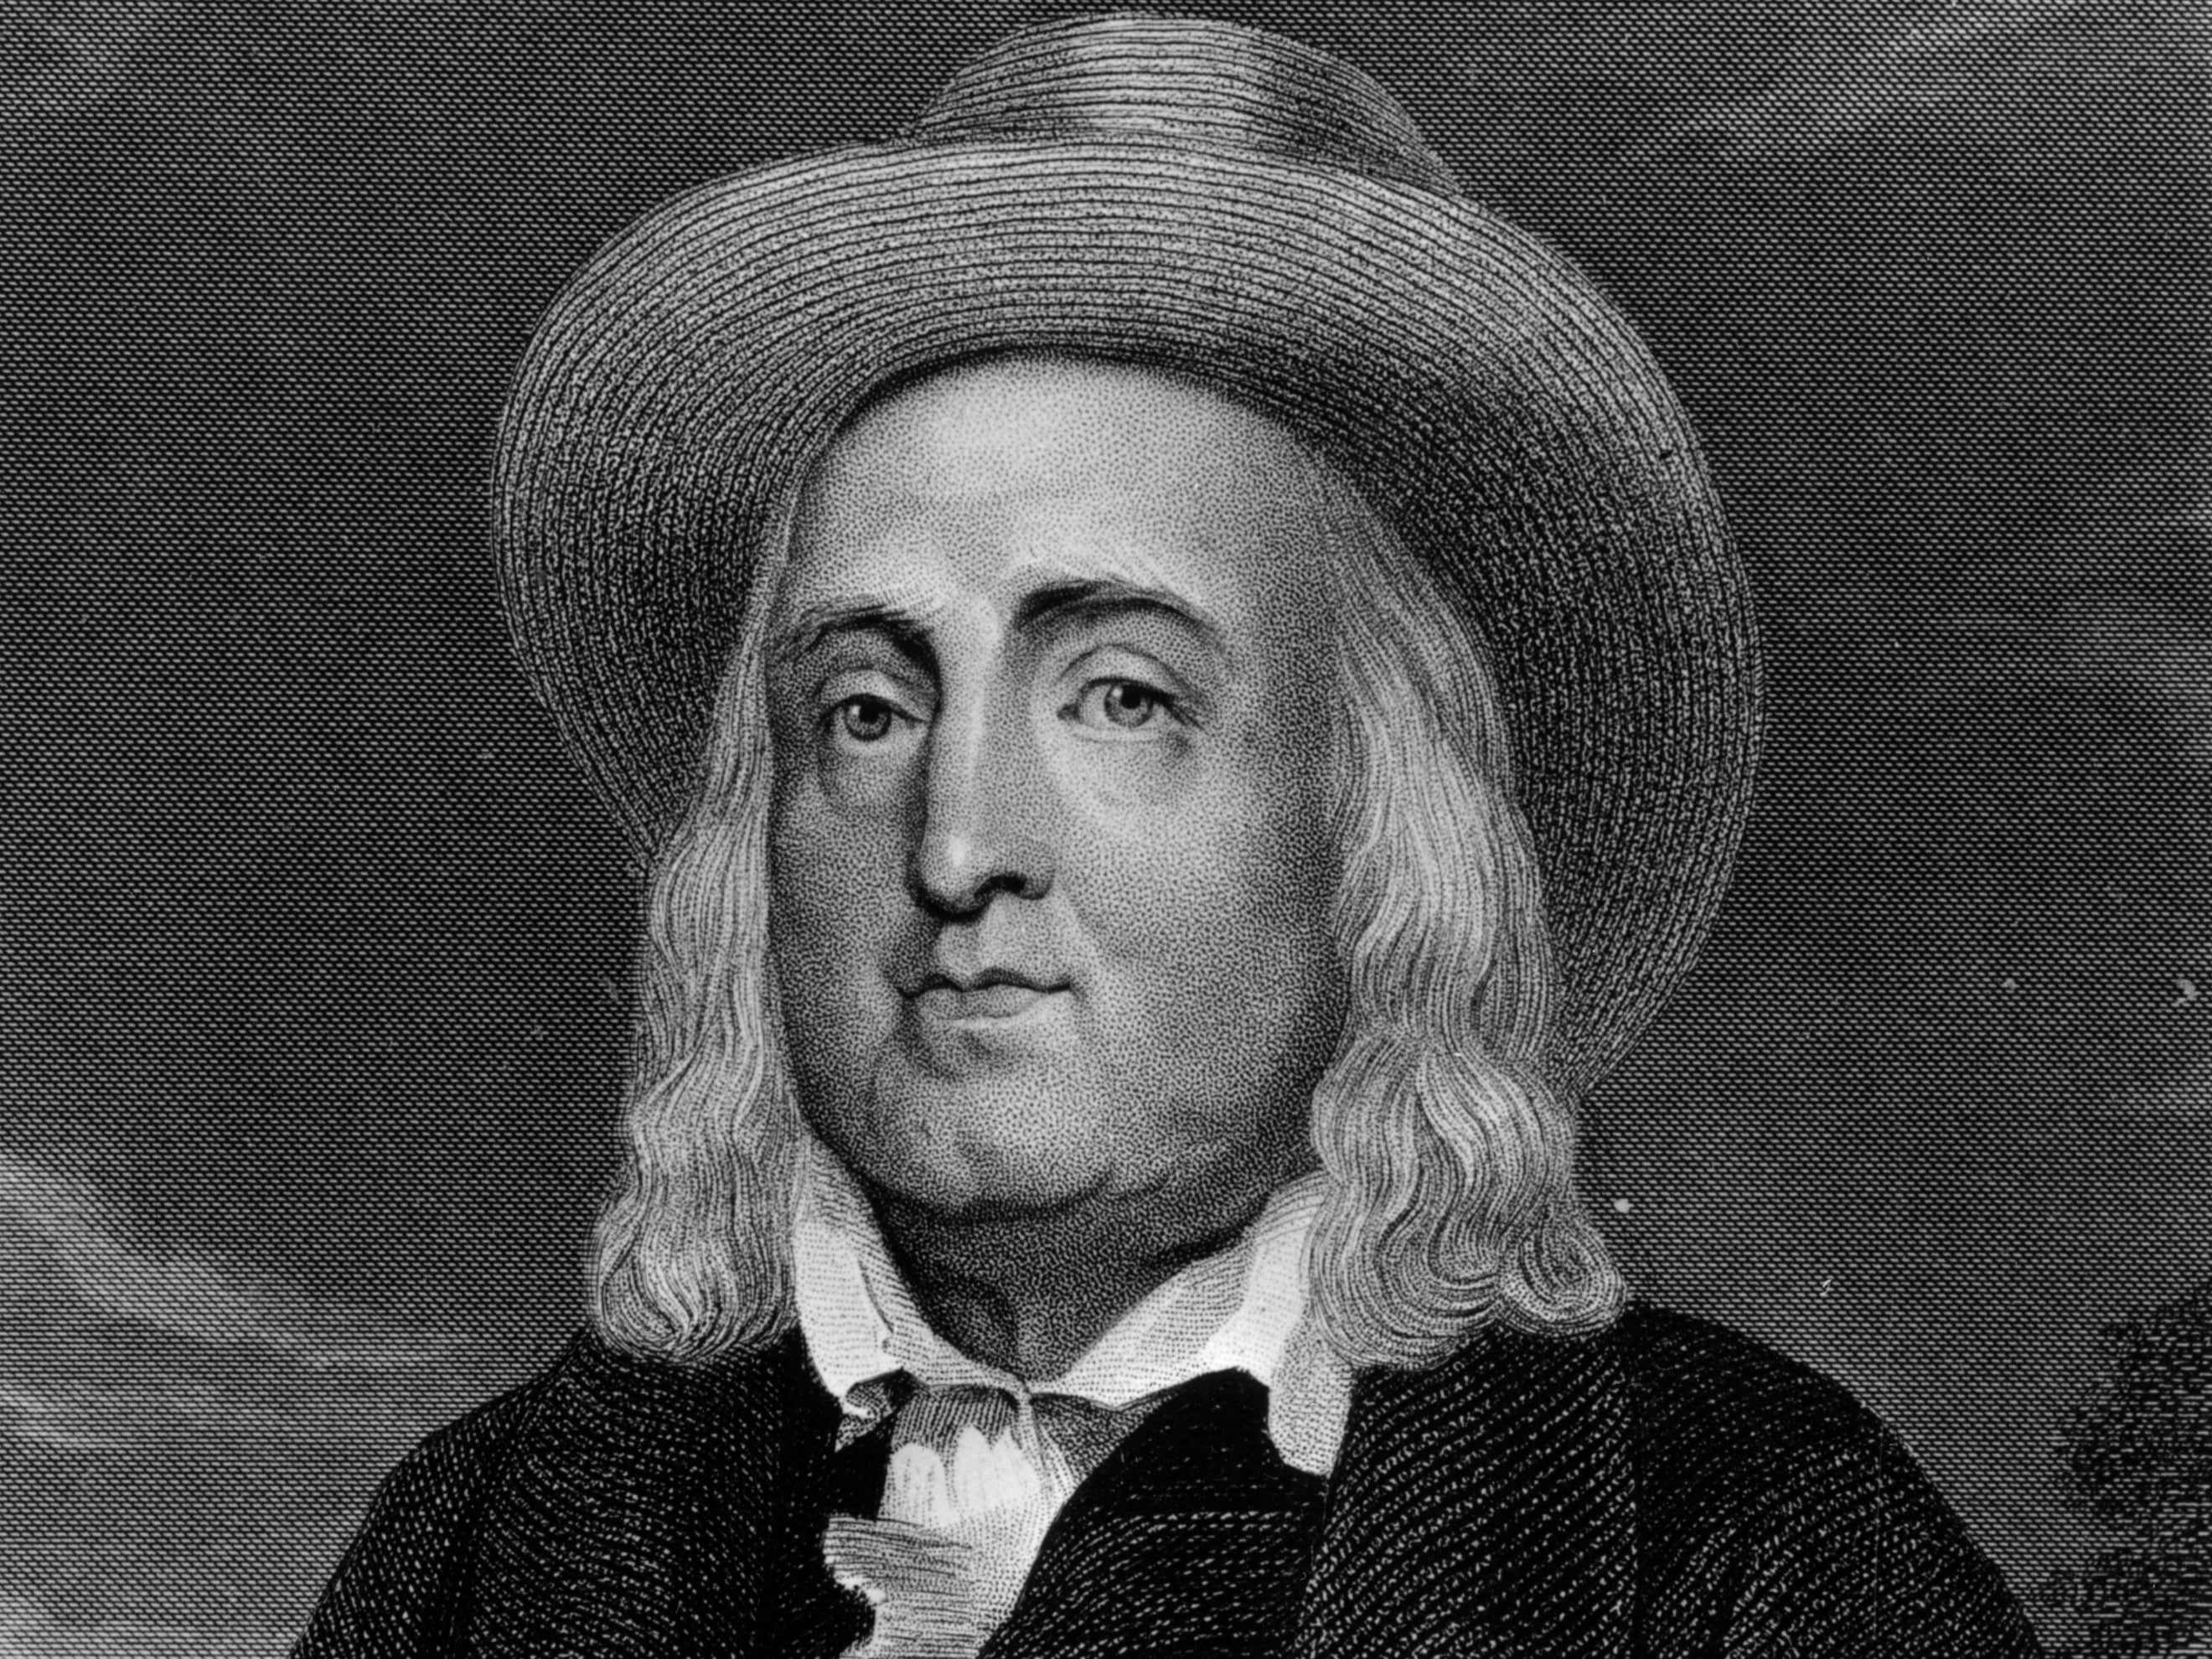 English philosopher, jurist and social reformer Jeremy Bentham